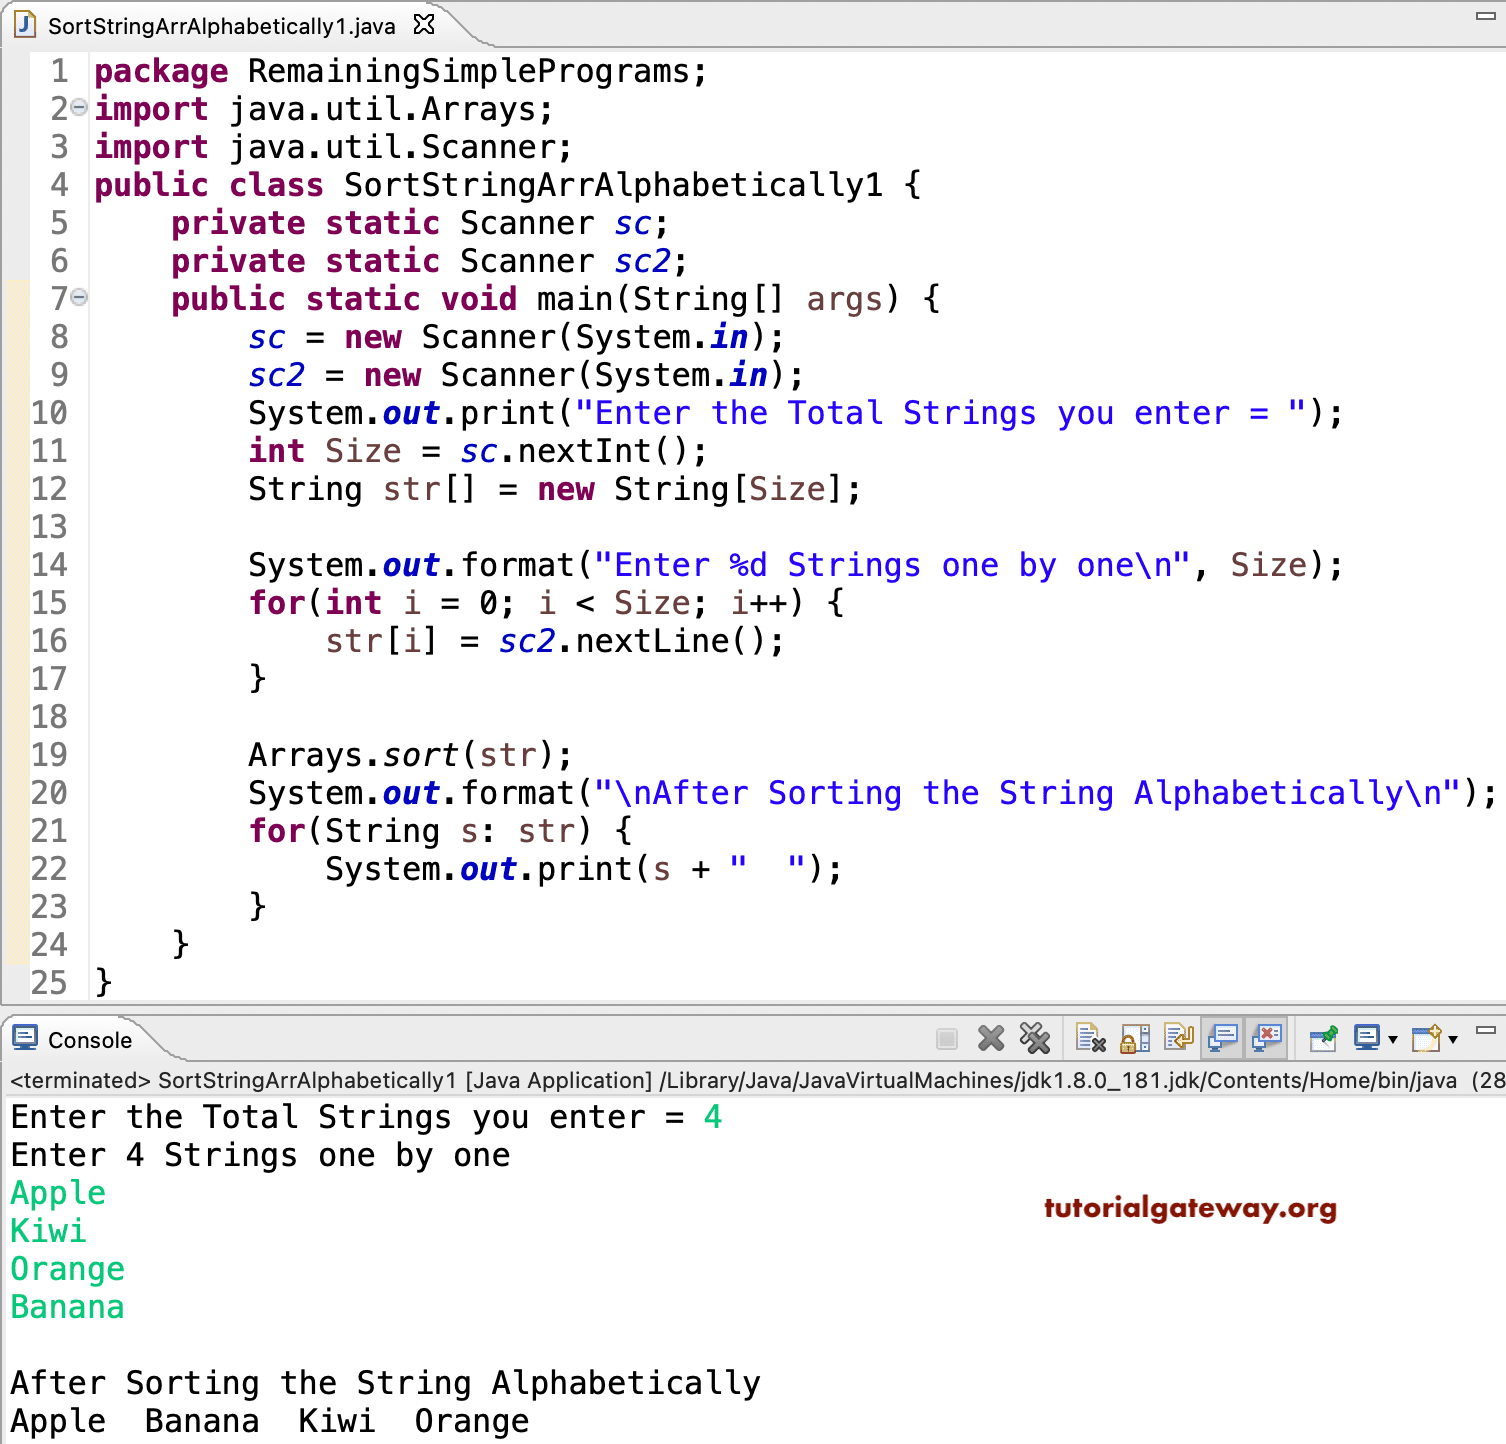 Java Program to Sort Strings in Alphabetical Order